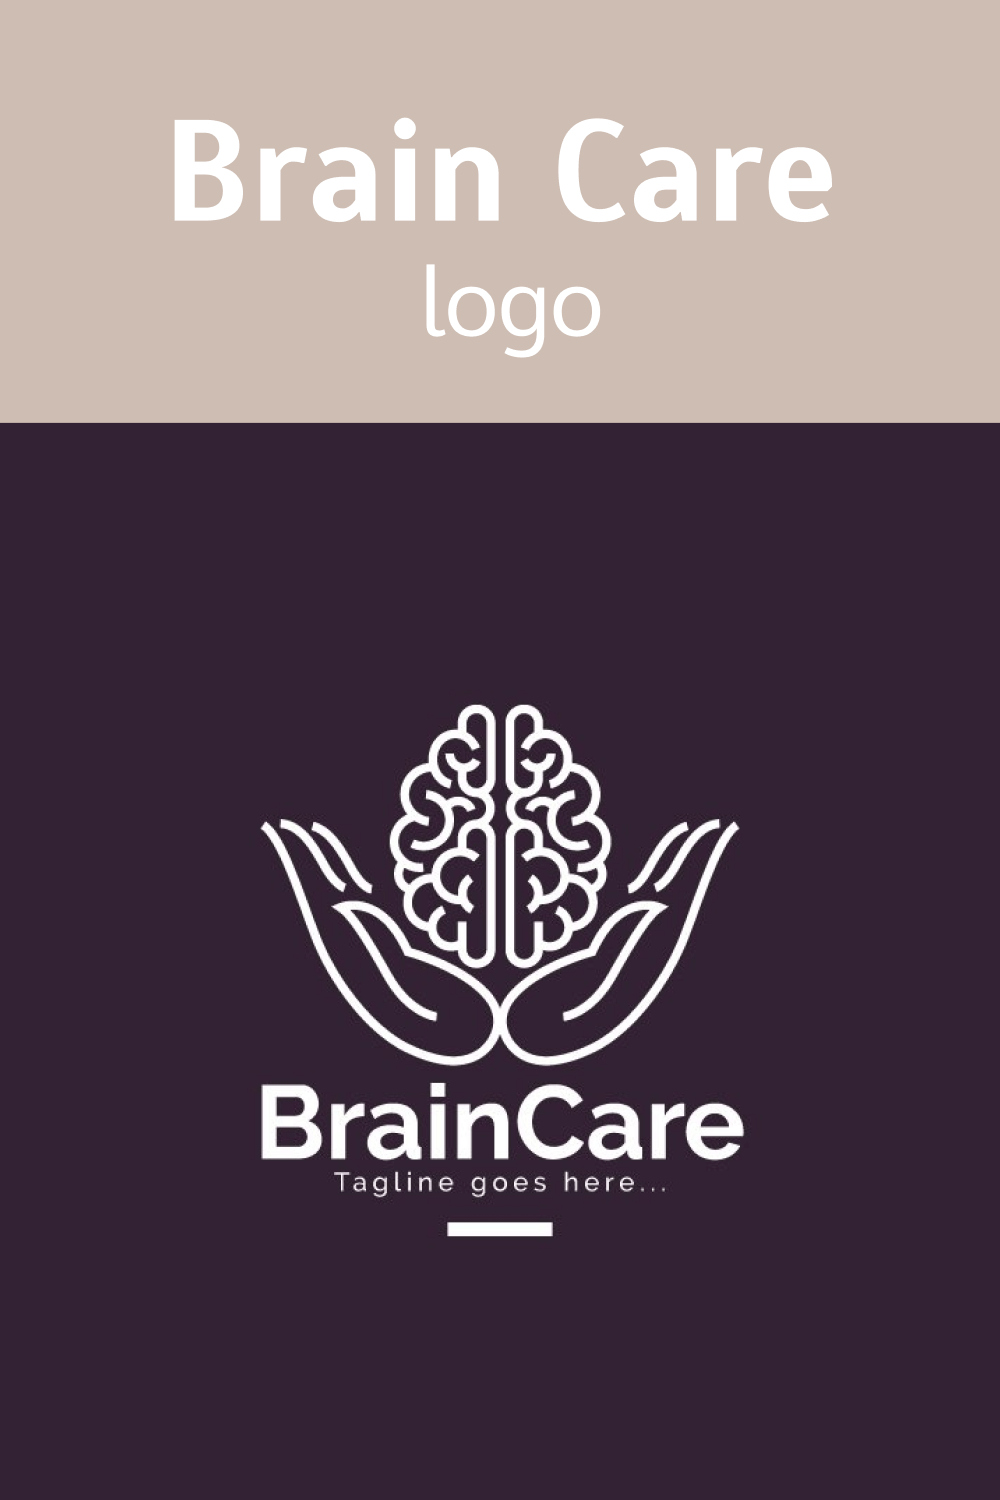 Brain care logo.